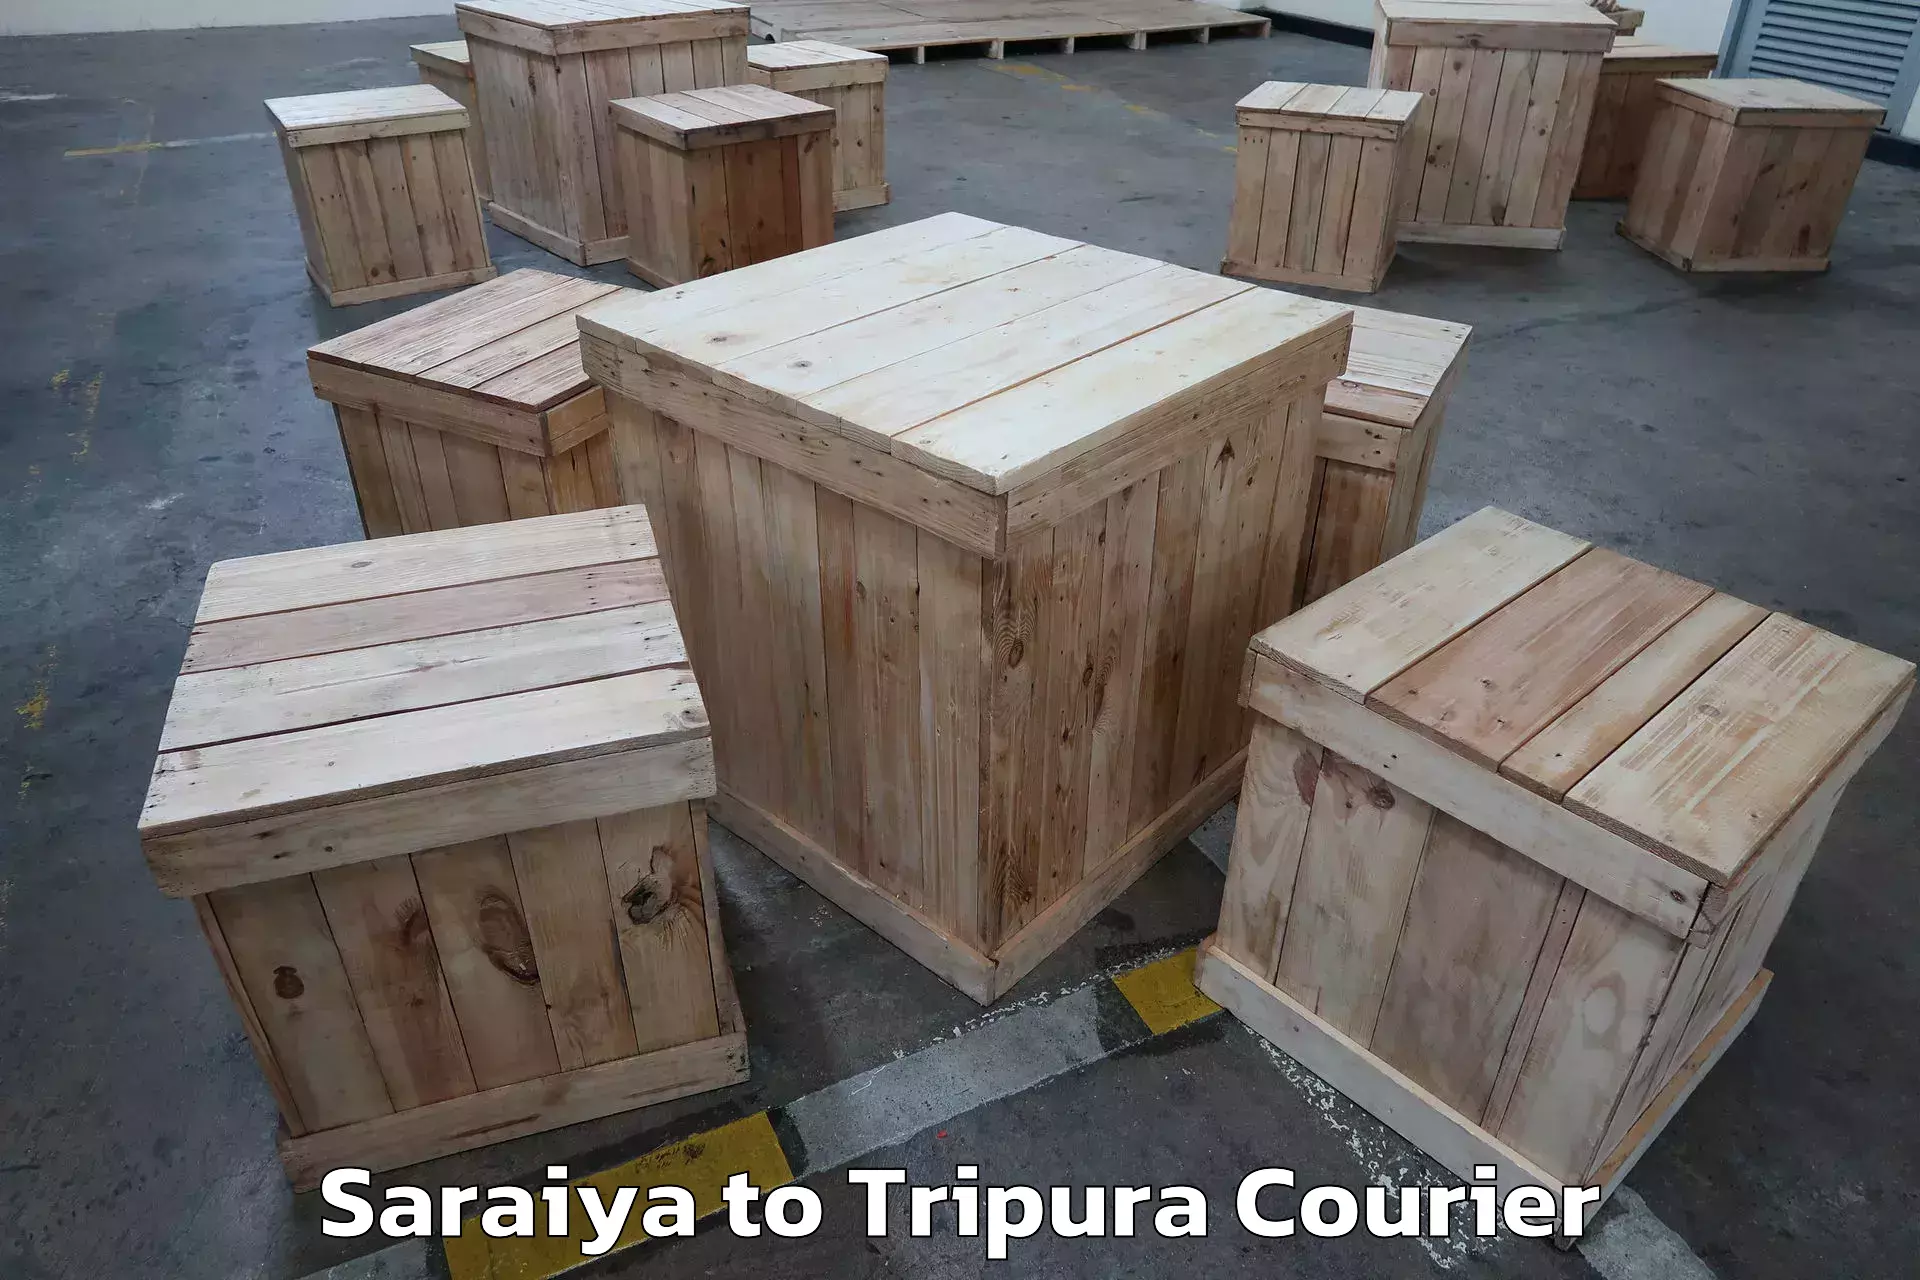 Trusted relocation experts Saraiya to Tripura